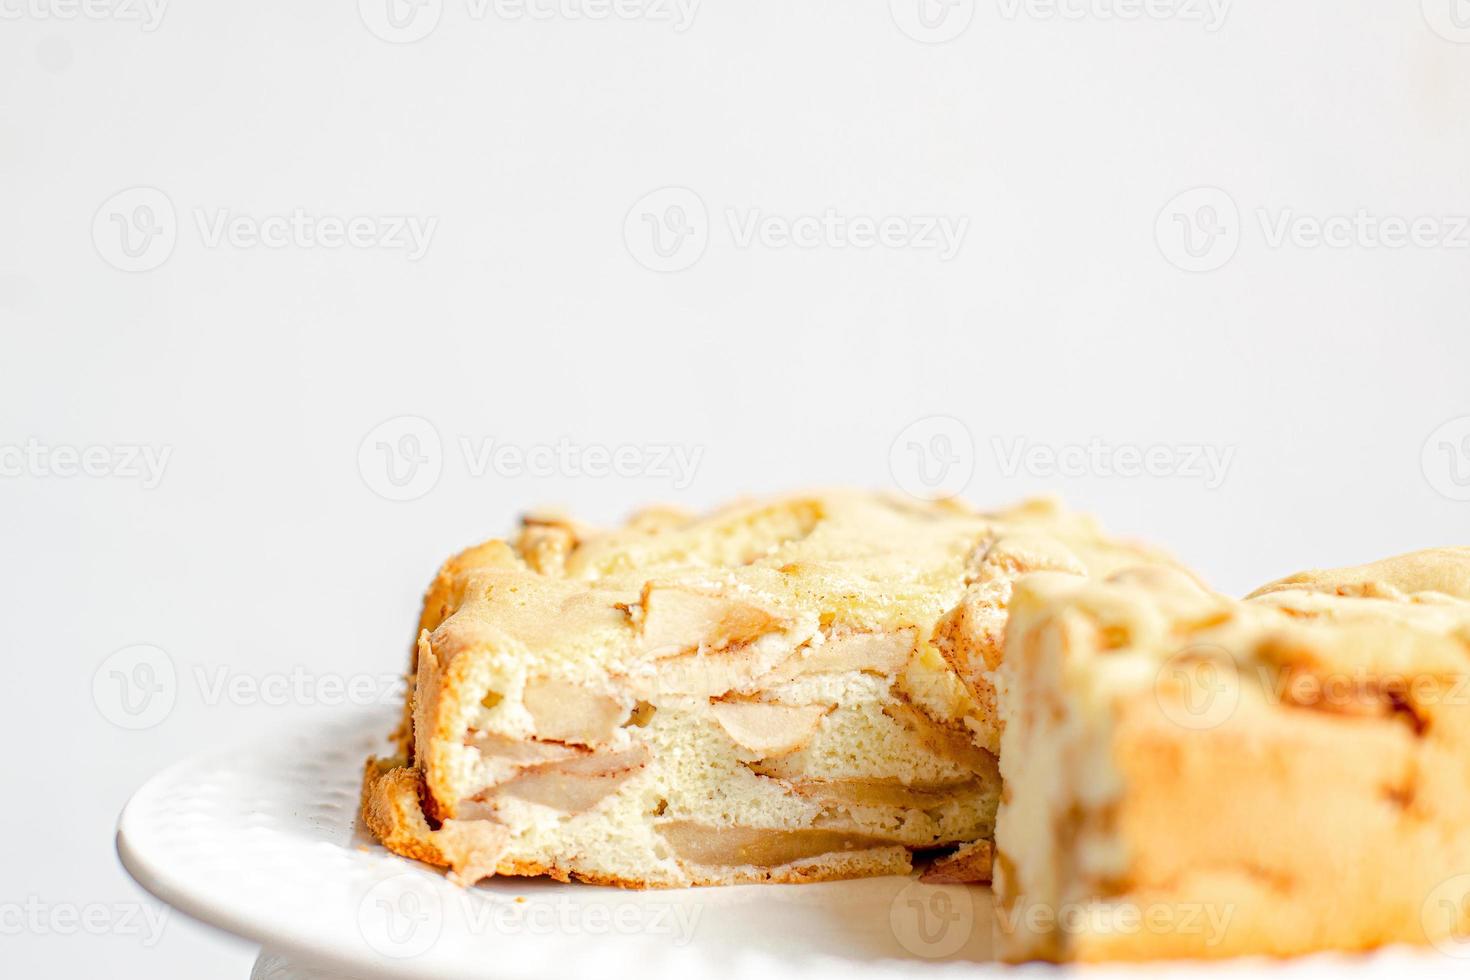 charlotte de postre casero de tarta de manzana orgánica. pastel de manzana de zapatero en un plato blanco. foto